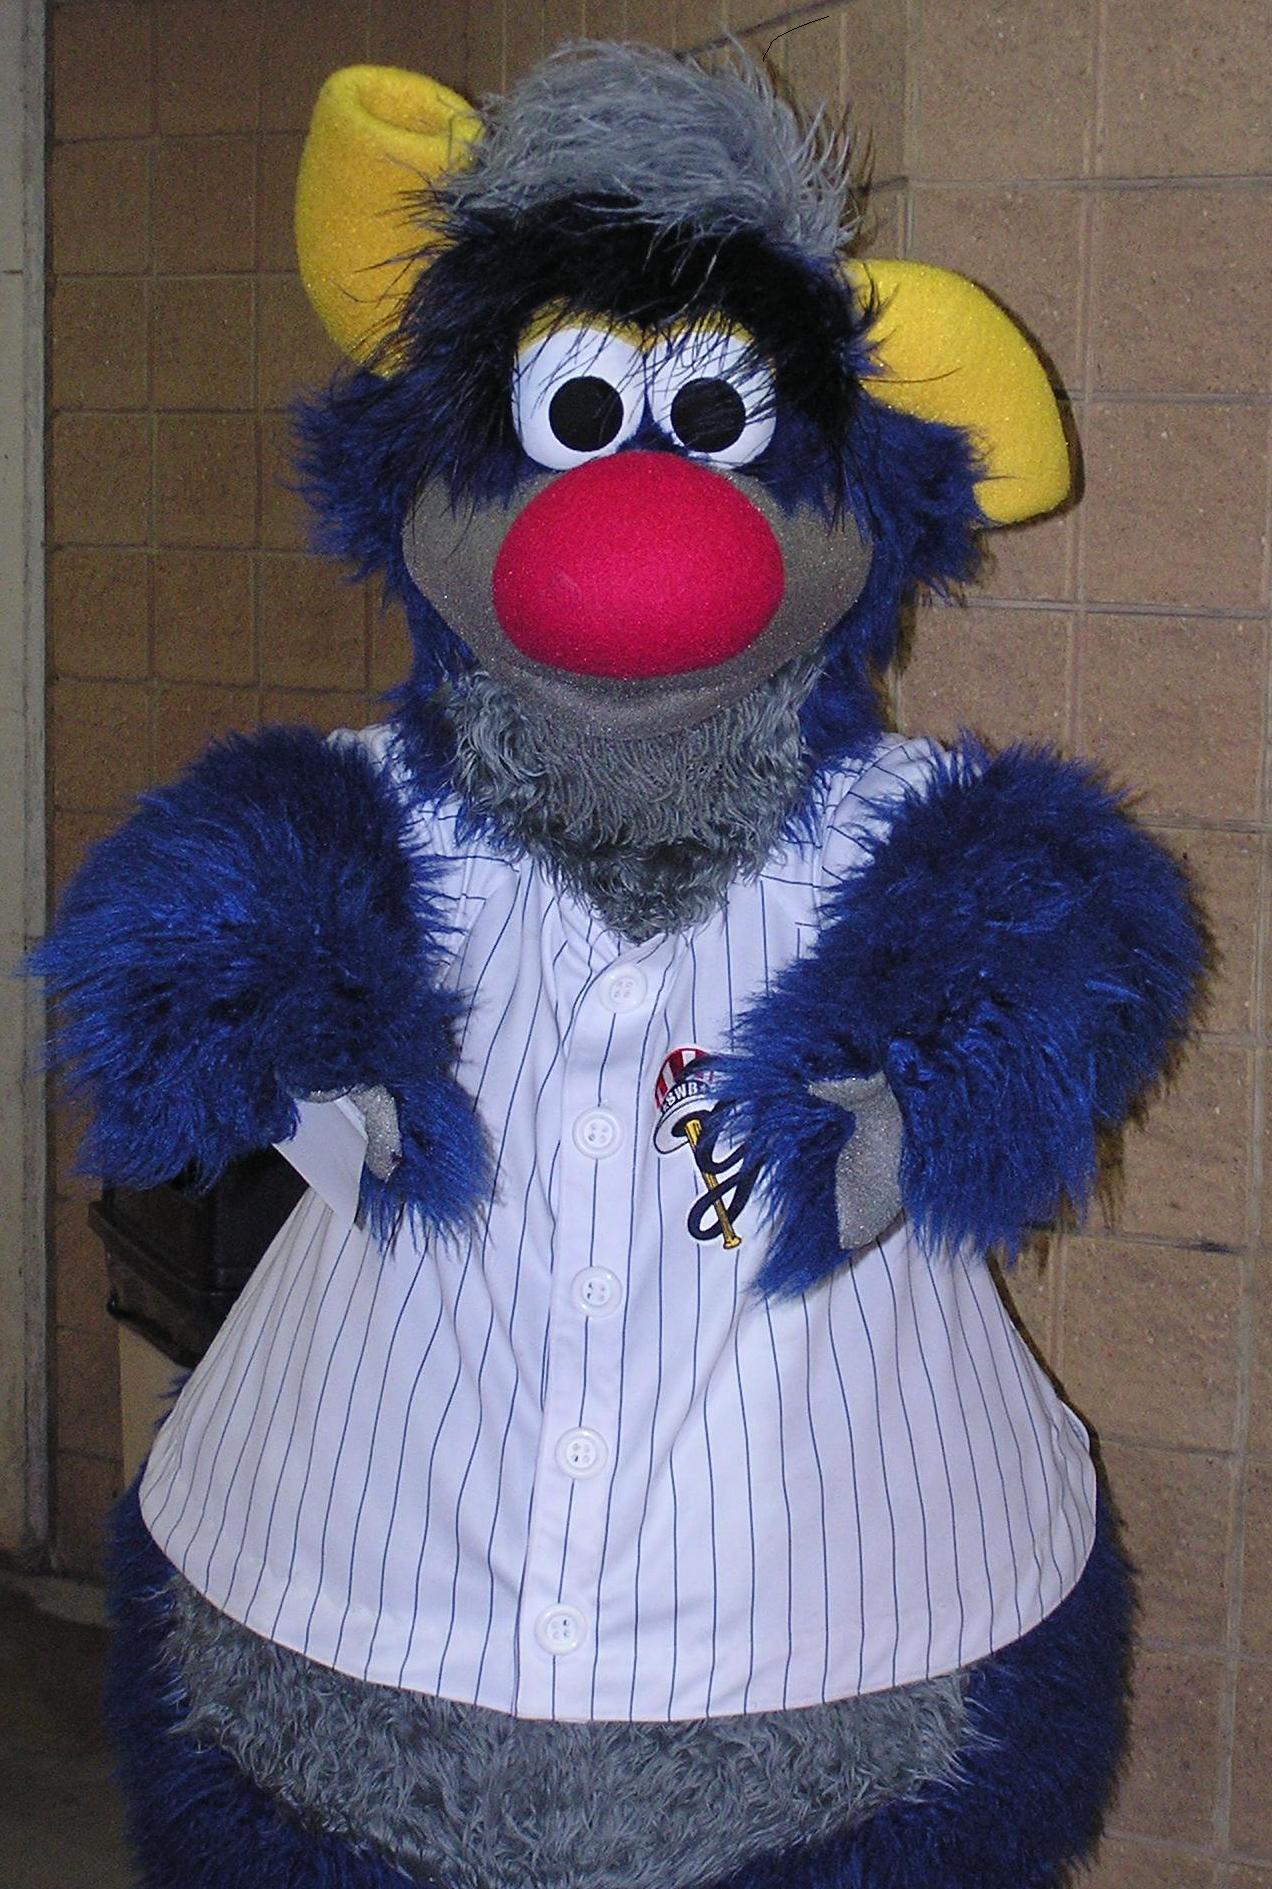 Champ - The SWB Yankee Mascot